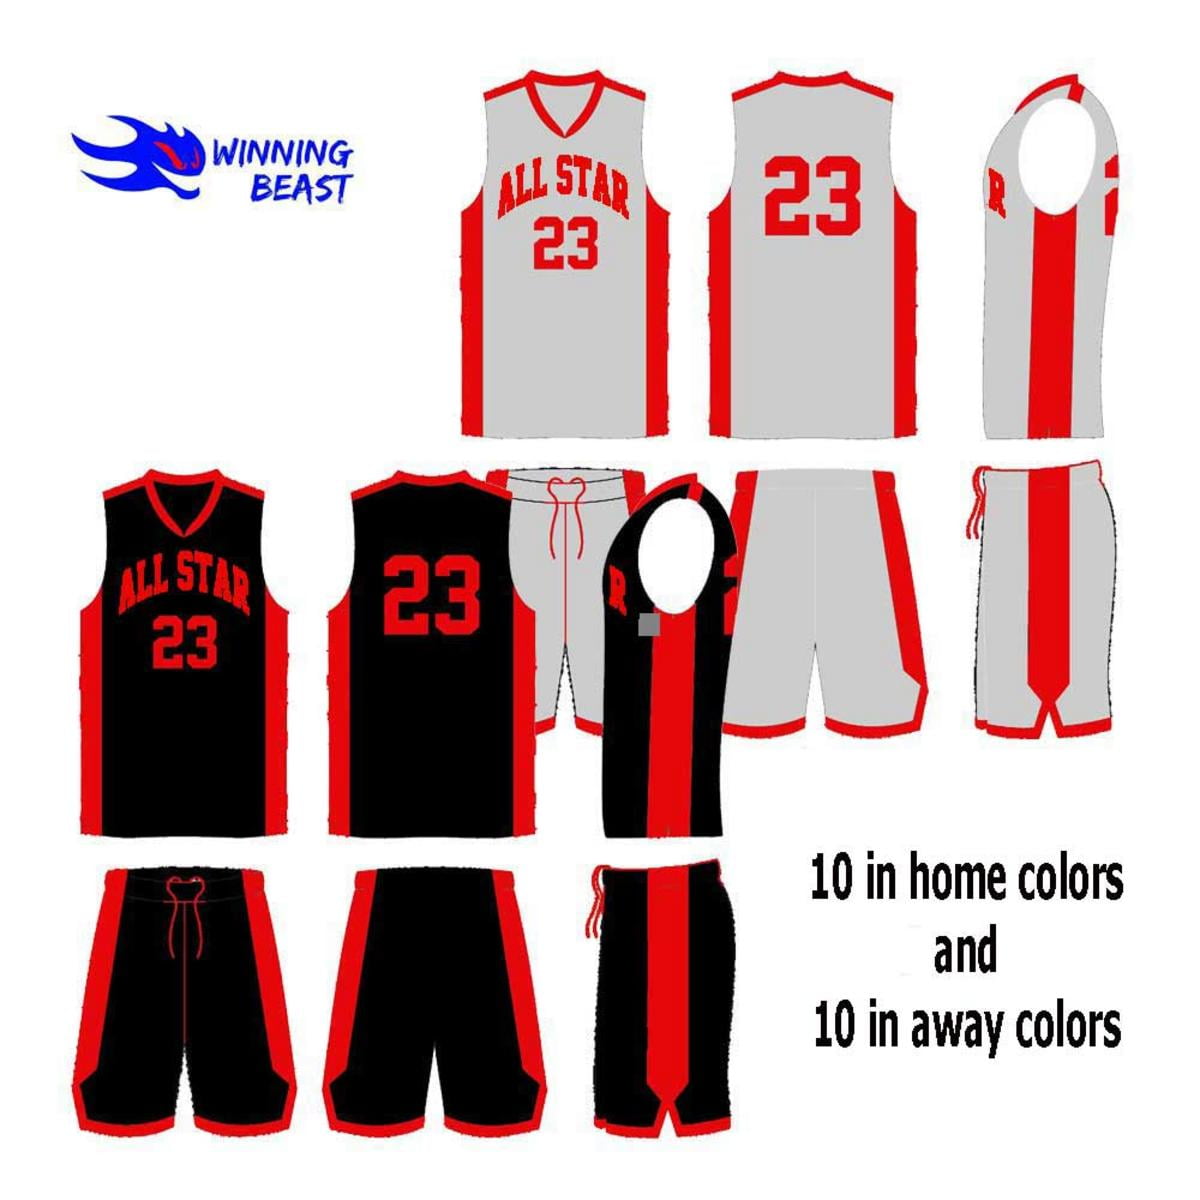 Winning Beast® - Lot of 20 basketball uniform kits (jersey & shorts) in ...